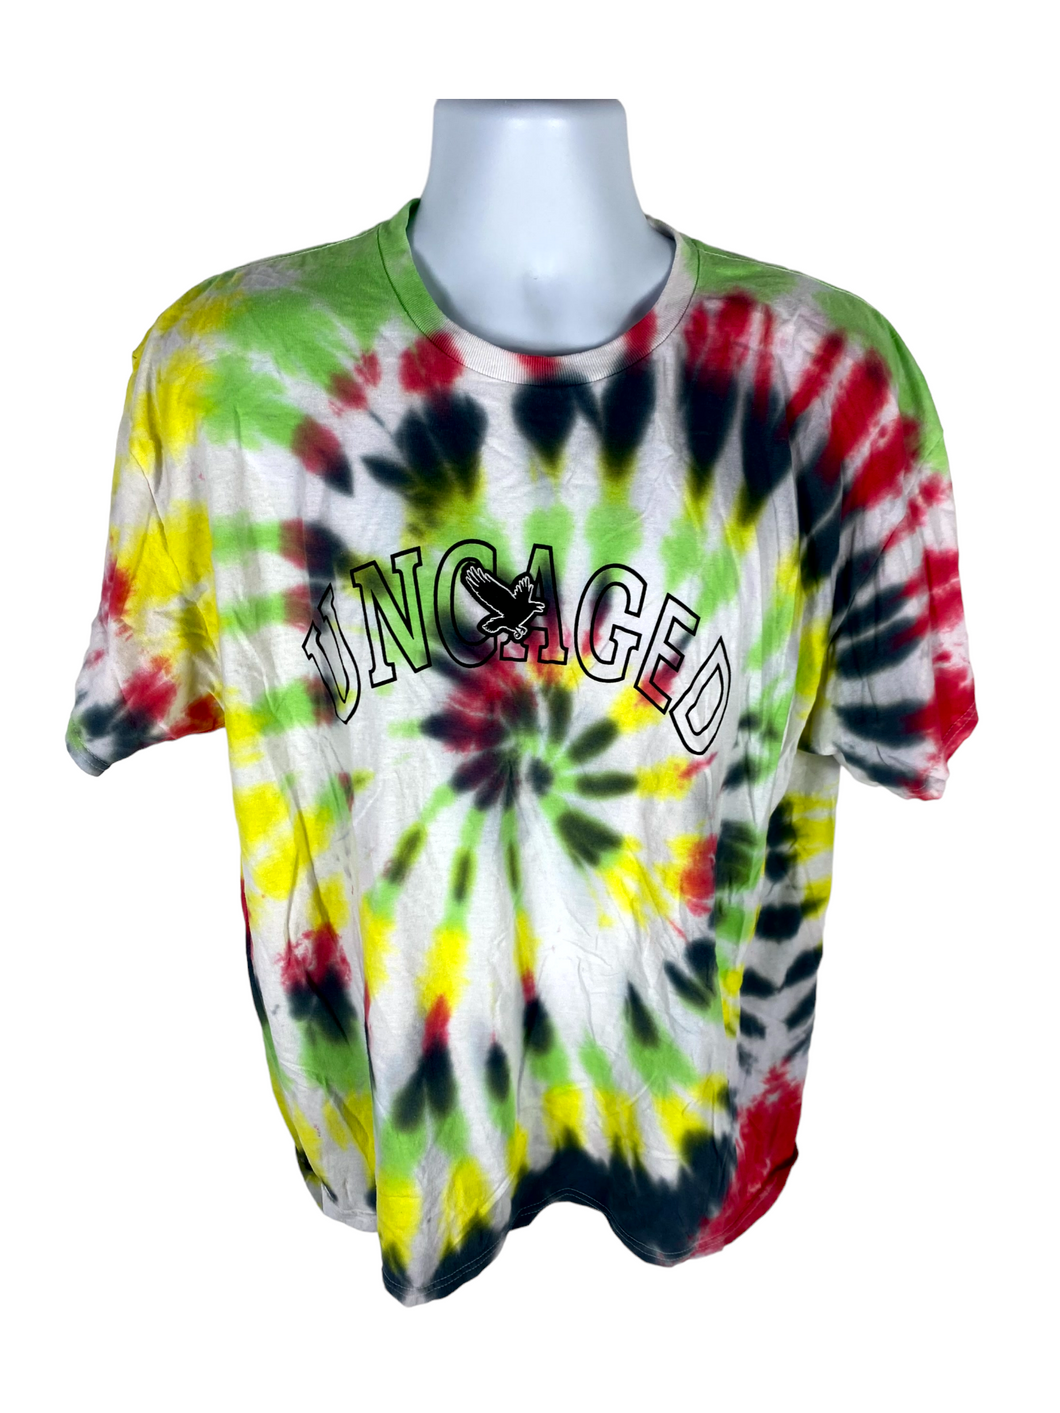 Uncaged Rasta Spiral T-Shirt - XL